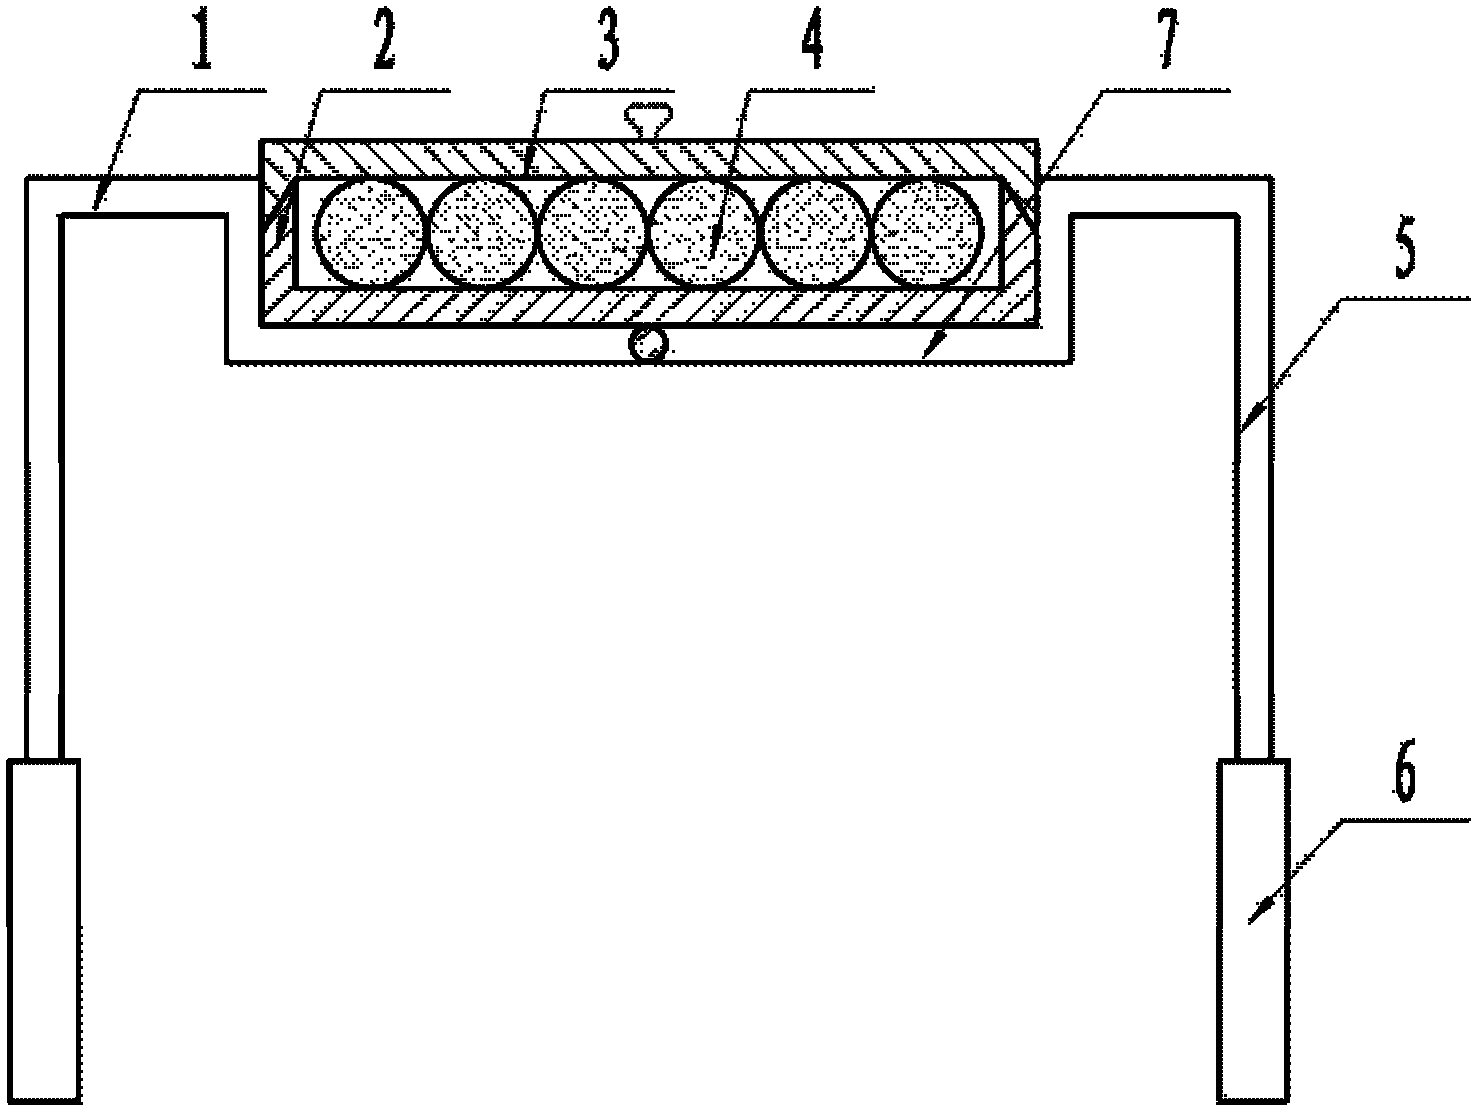 Heat insulating device